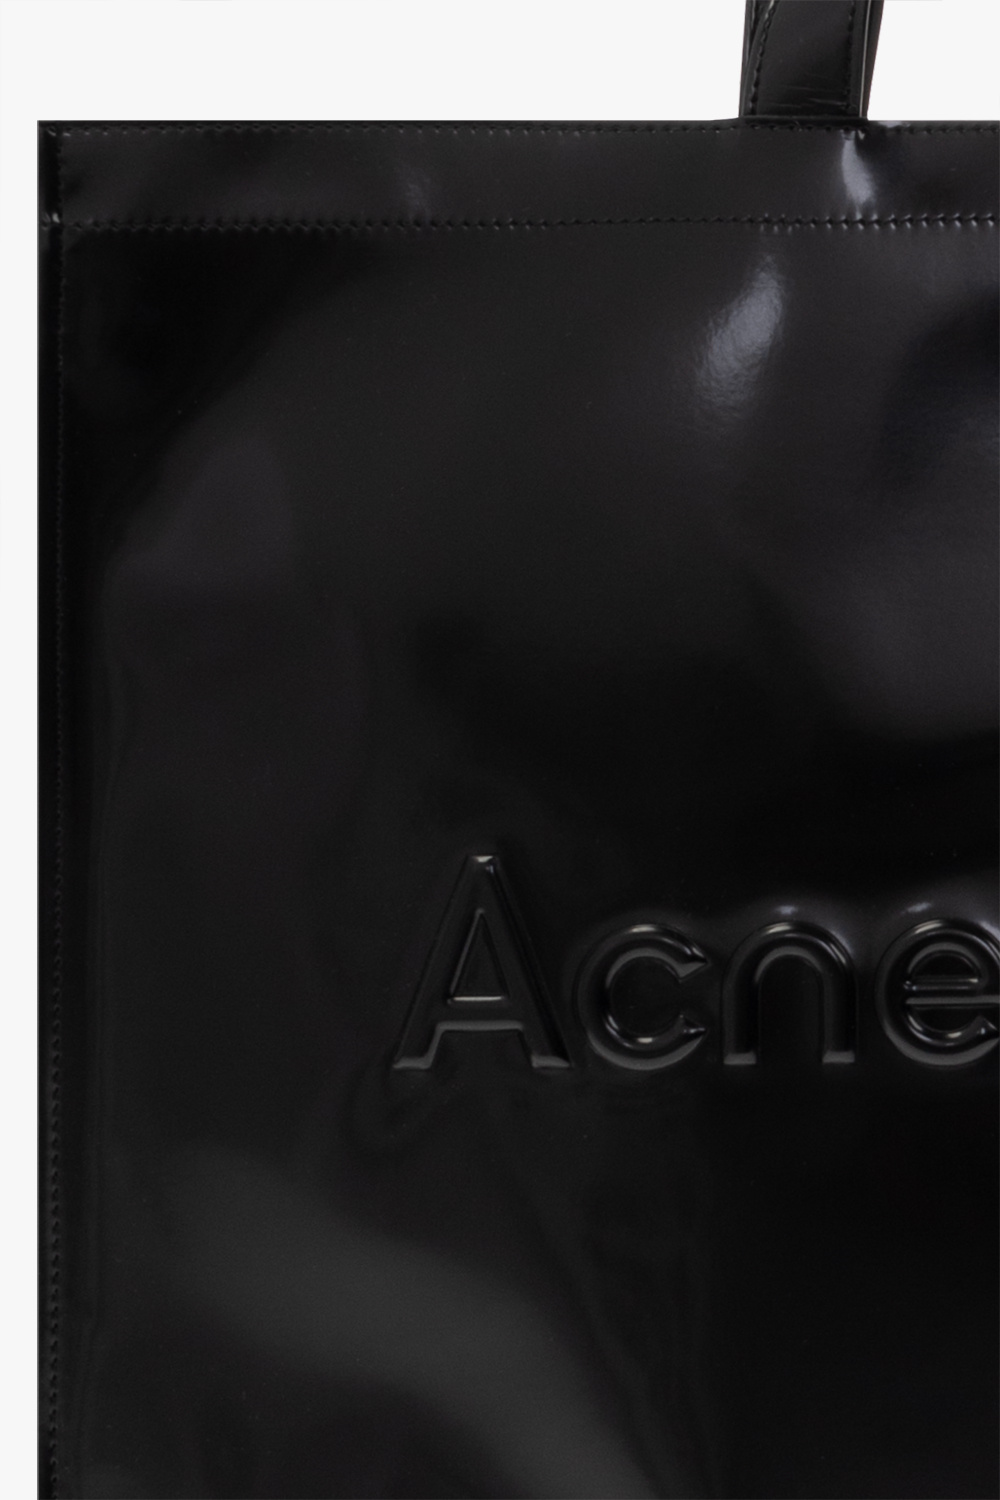 Acne Studios Shopper Burch bag with logo